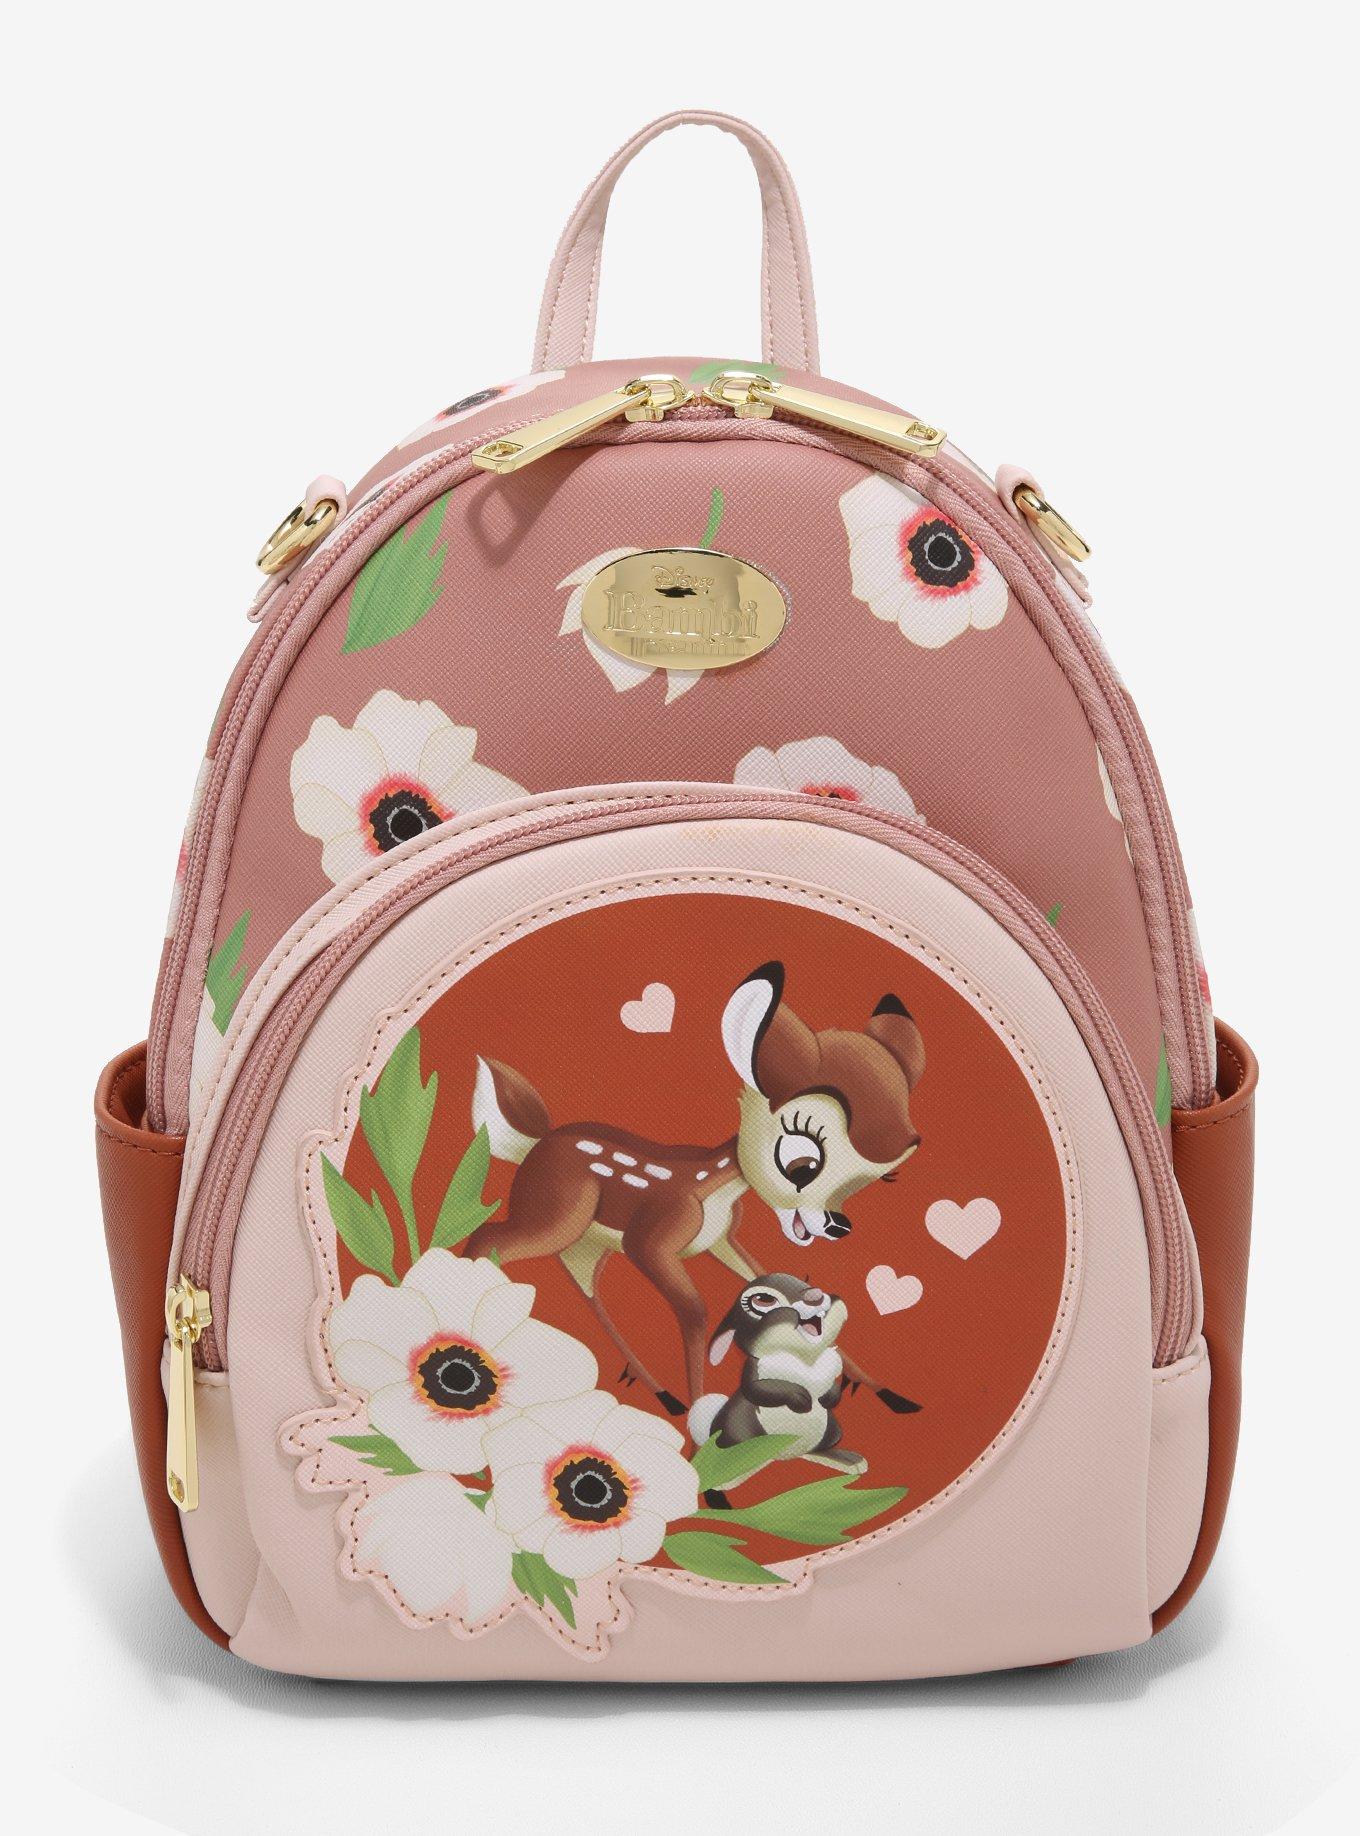 Loungefly Disney Bambi Watercolor Mini Backpack 